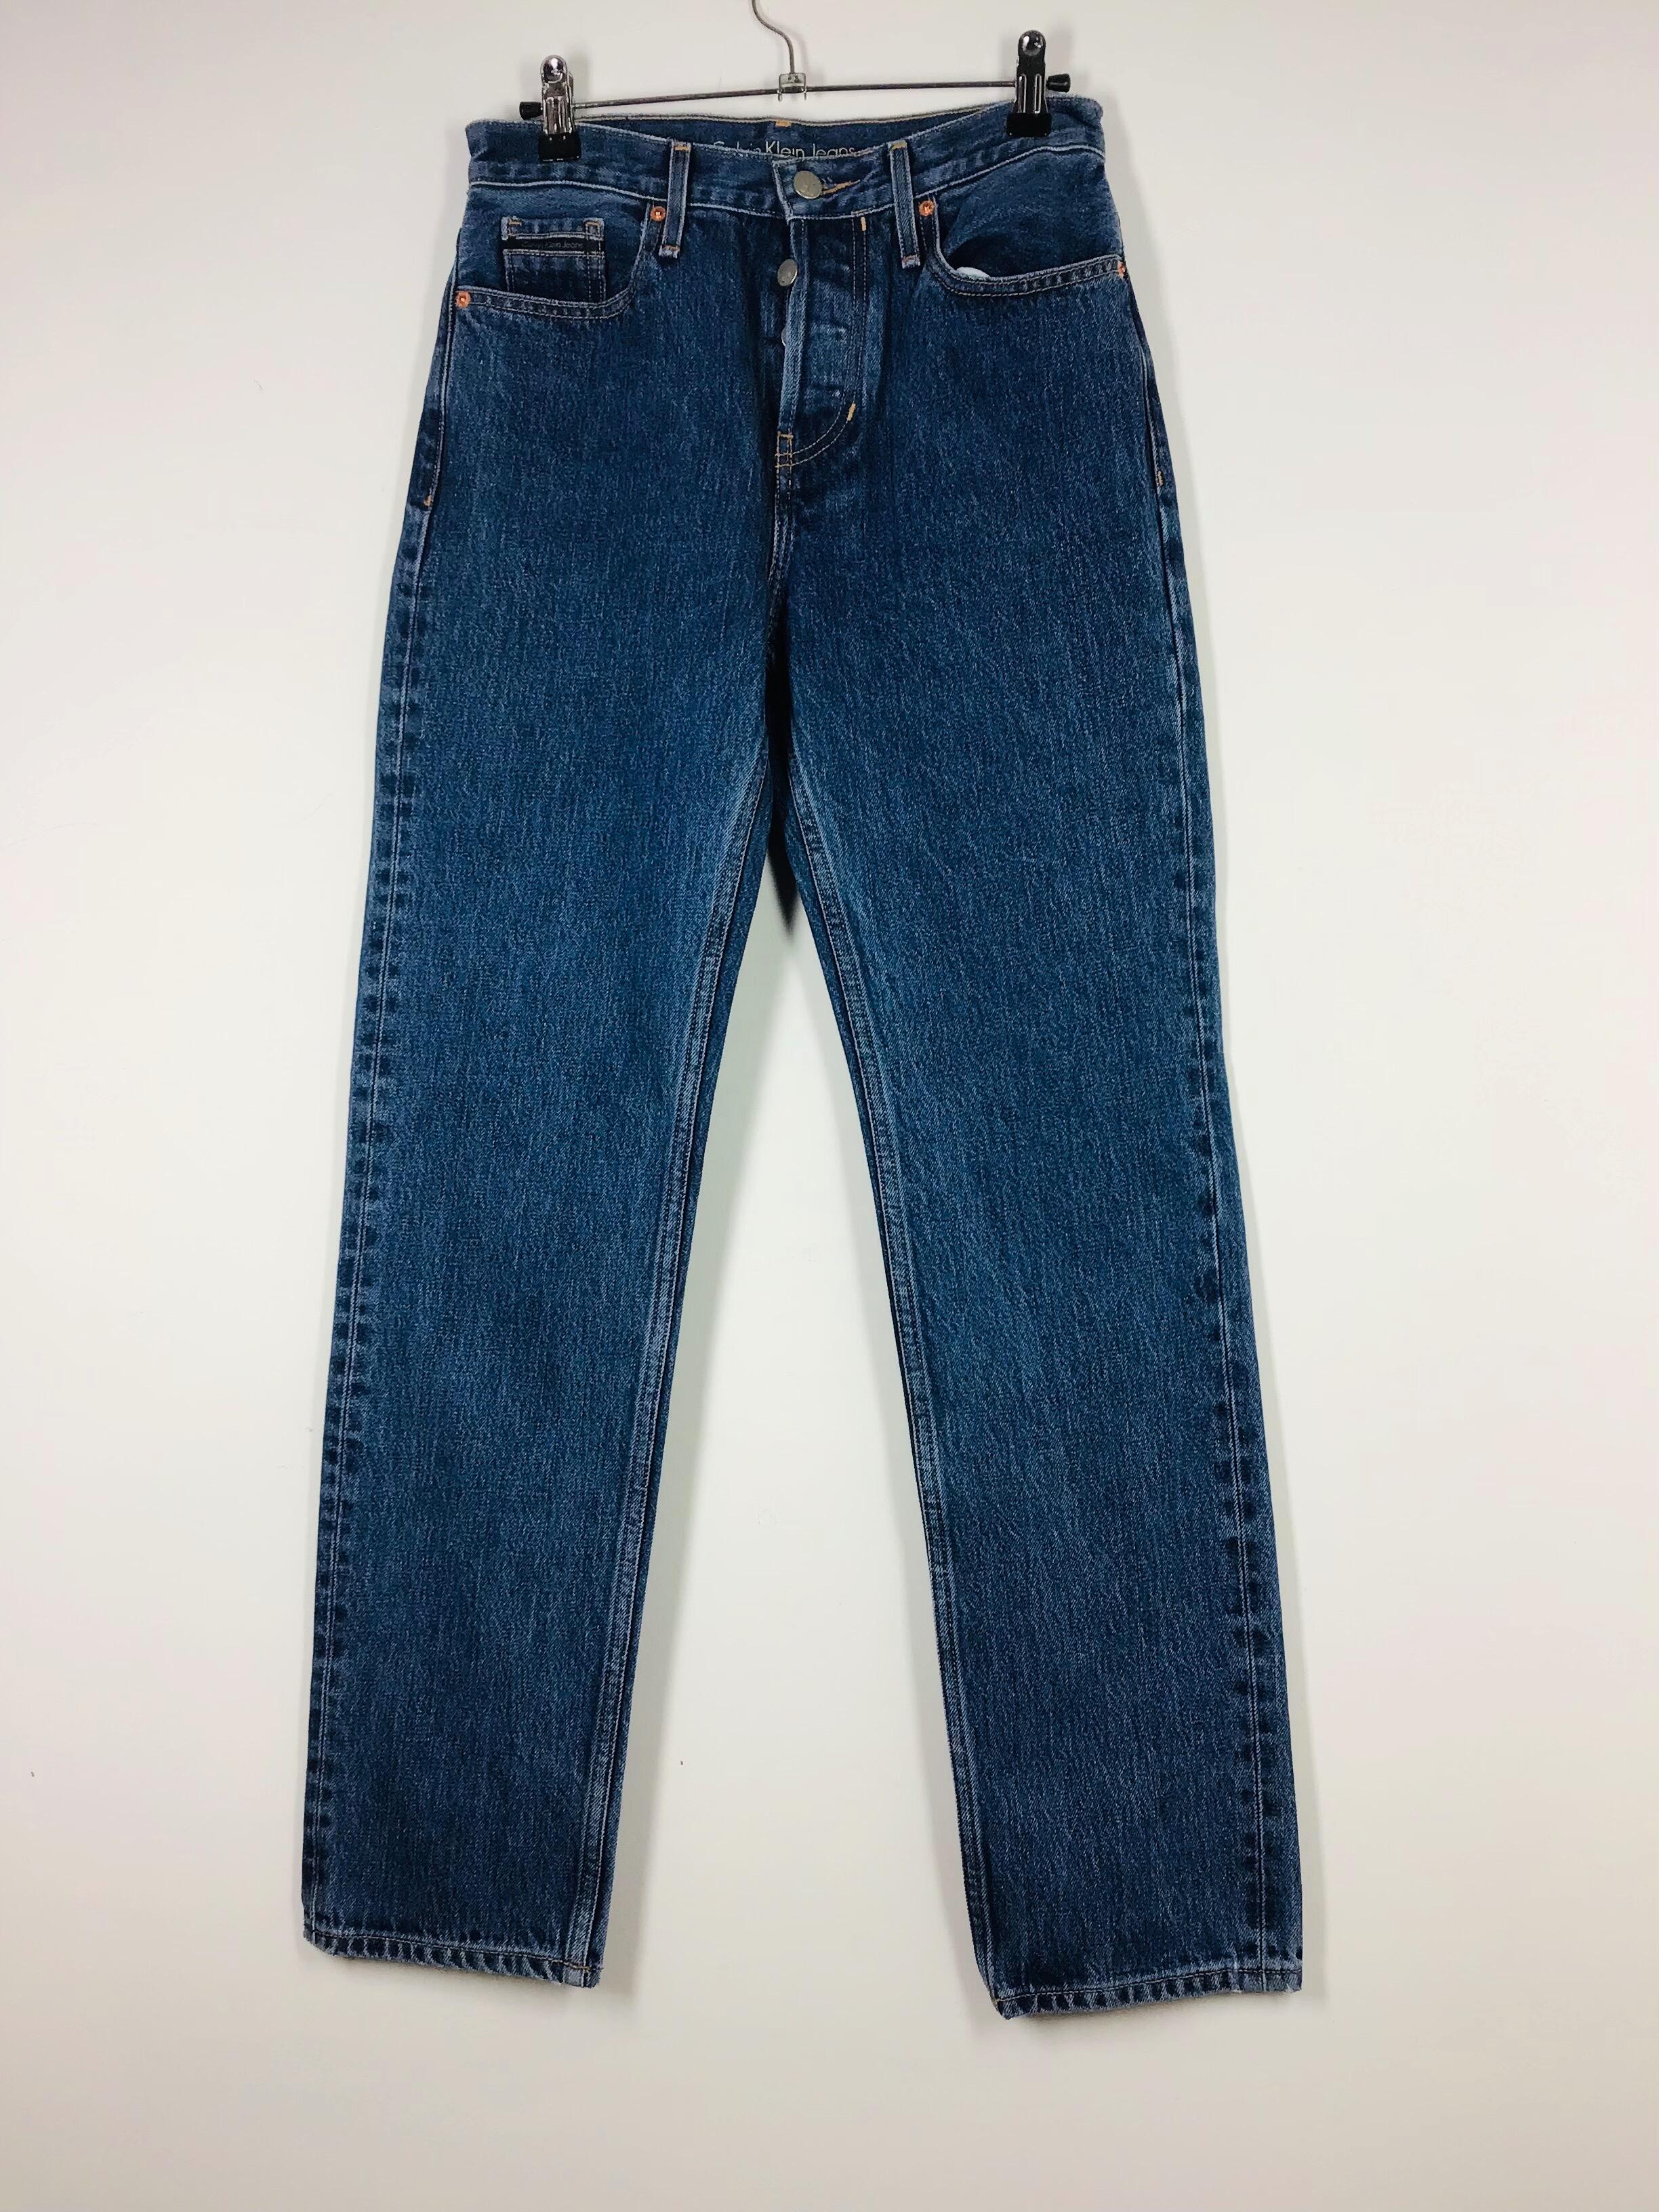 DKNY JEANS Women's Soho Classic Mid Rise Skinny Jeans Medium Blue Size 14  L/G